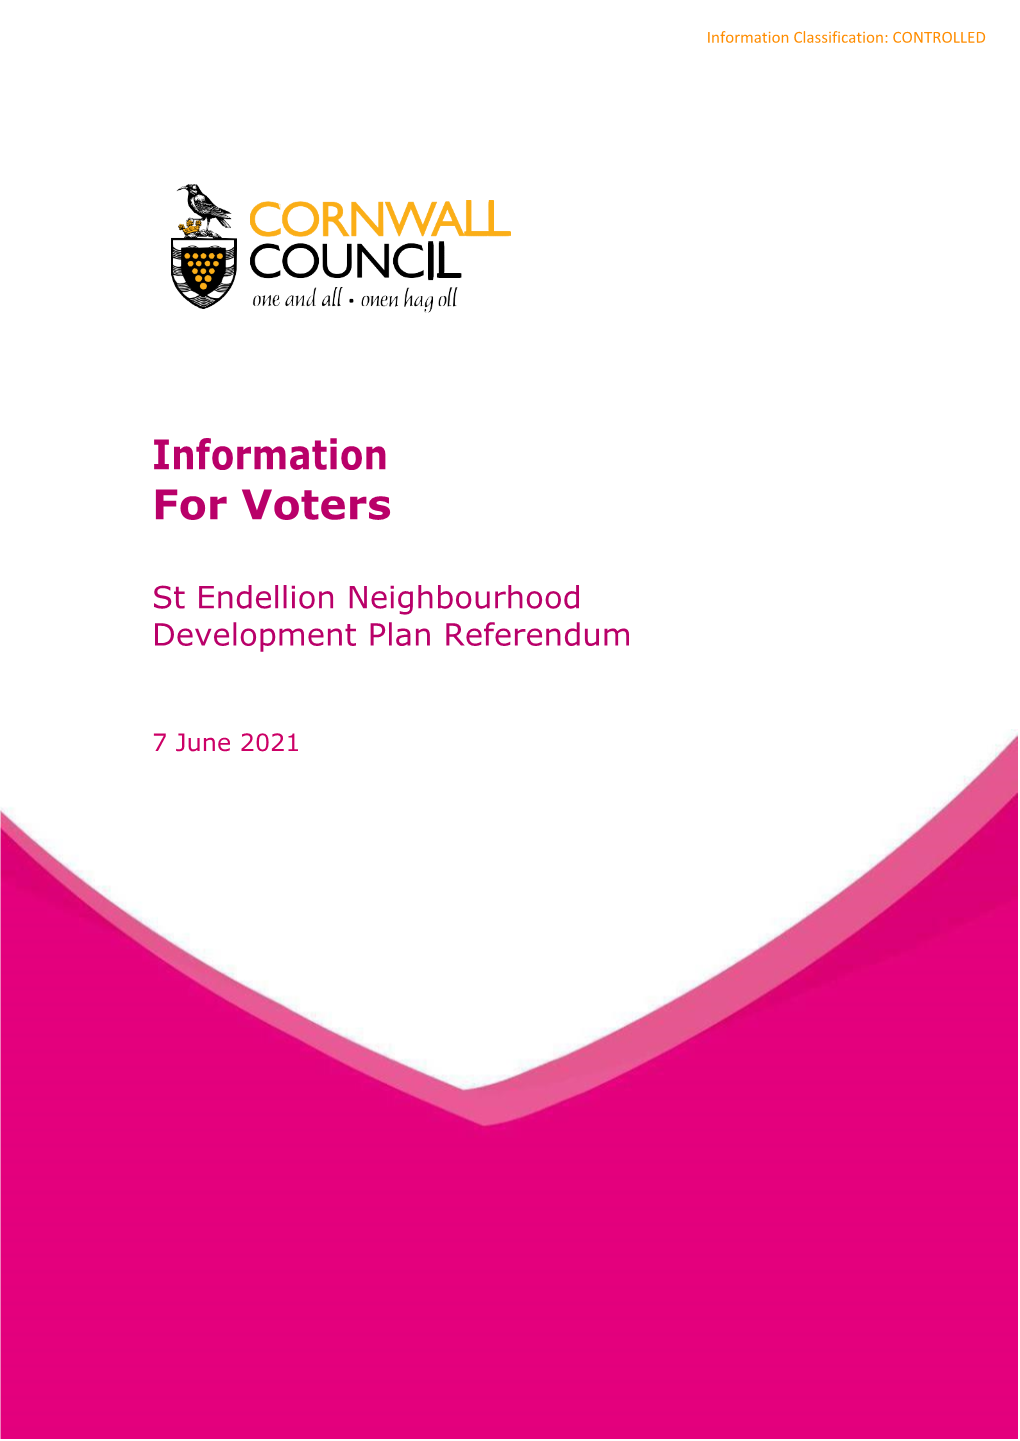 Information for Voters on St Endellion Neighbourhood Plan Referendum